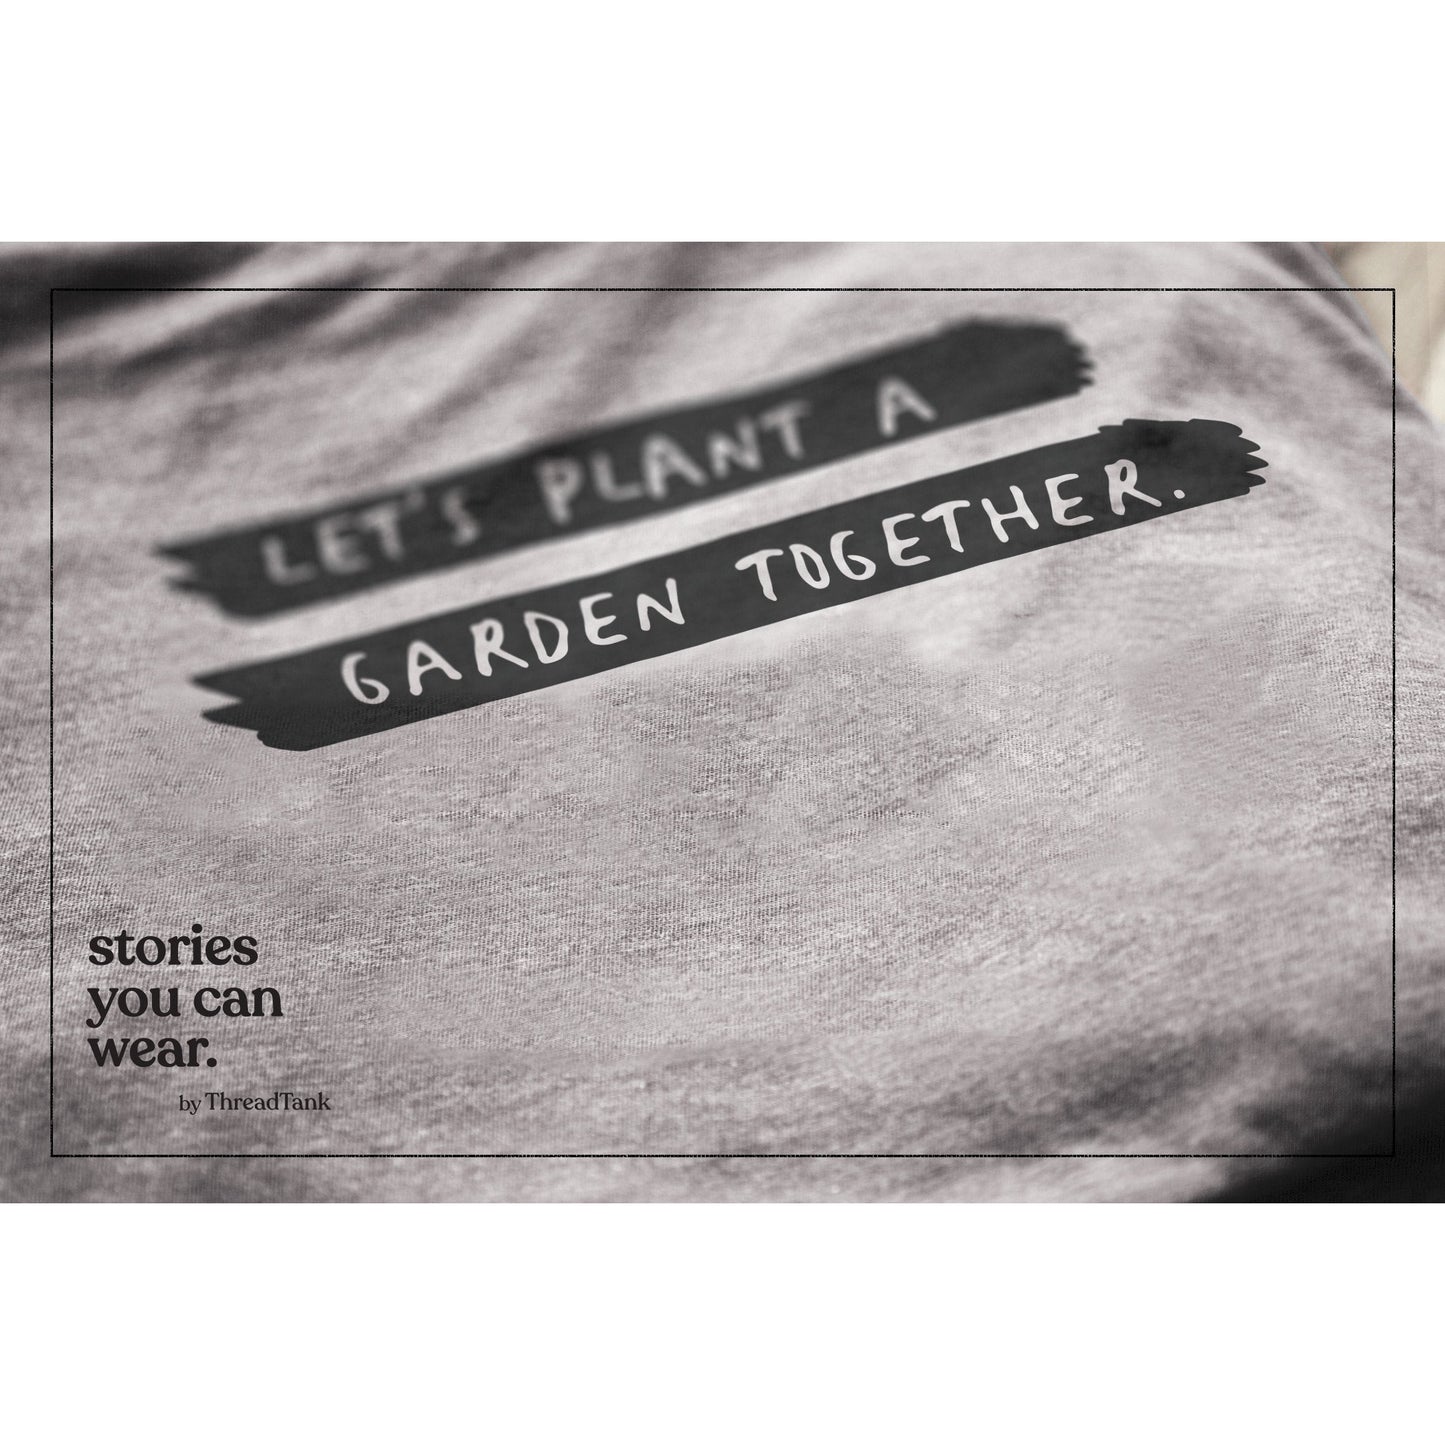 Let's Plant A Garden Together